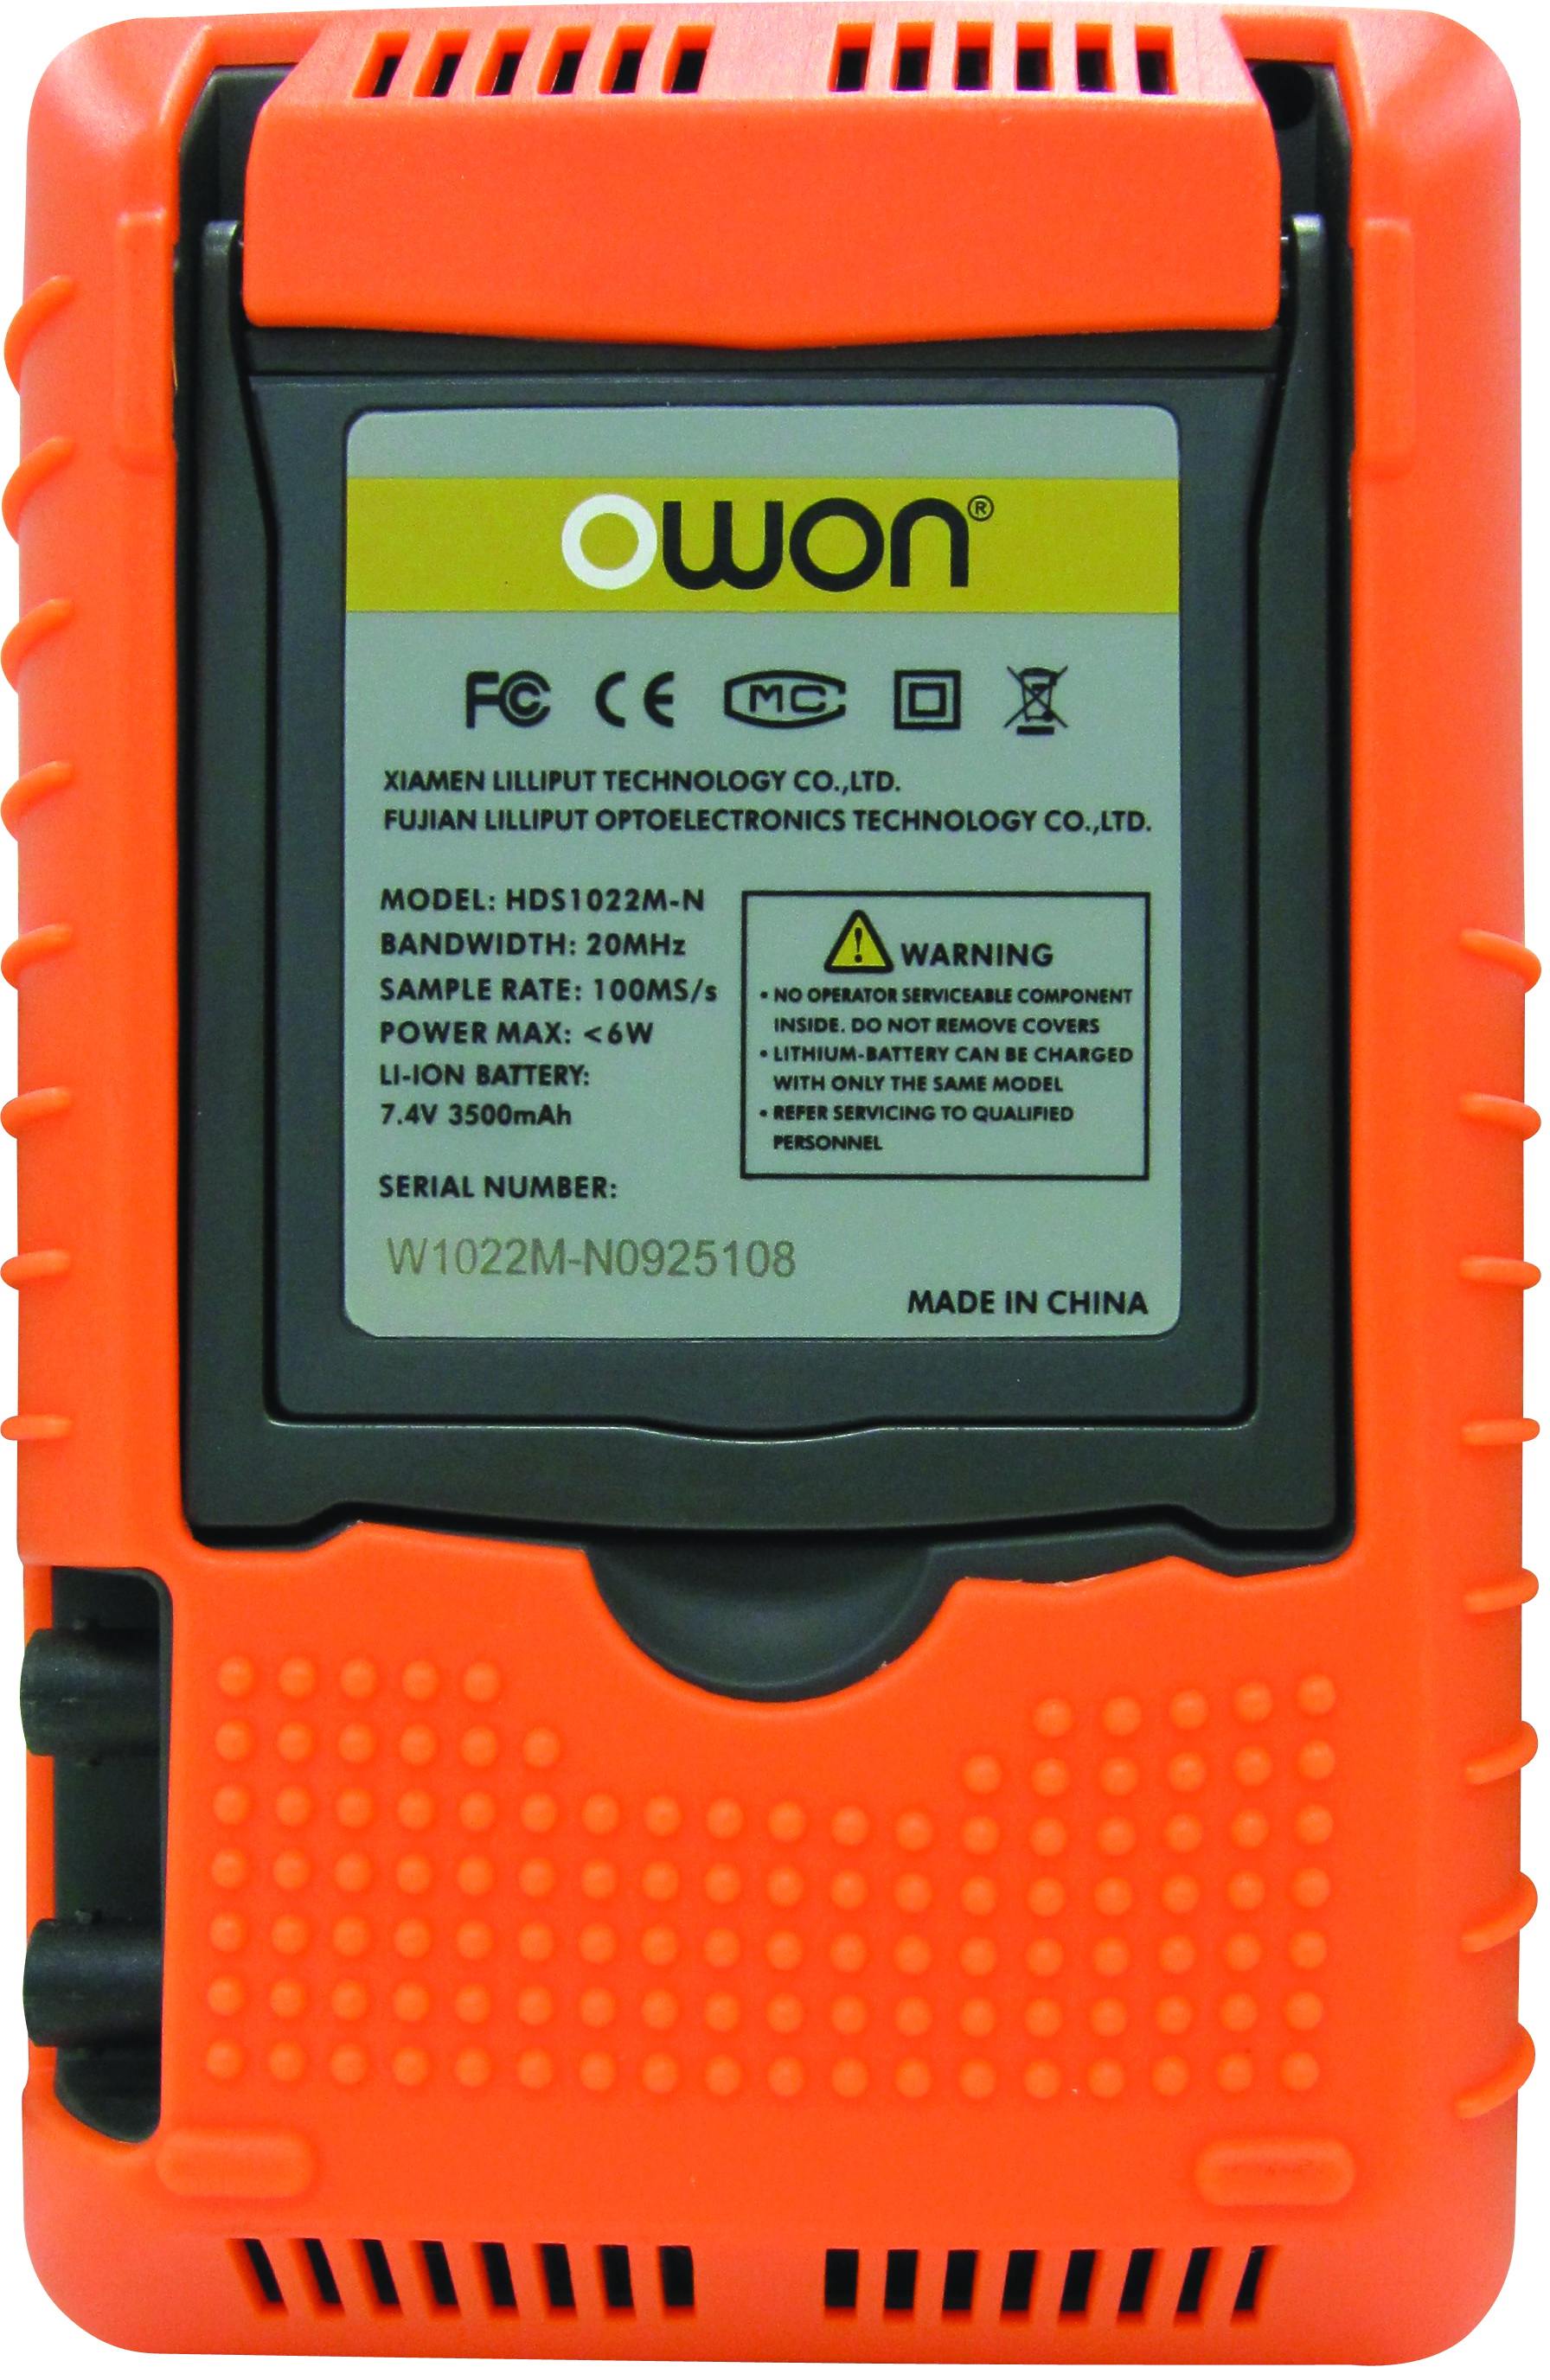 Owon HDS1022M-N Series HDS-N Handheld Digital Storage Oscilloscope and Digital Multimeter 2 Channels 20MHz 100MS/s Sample Rate 